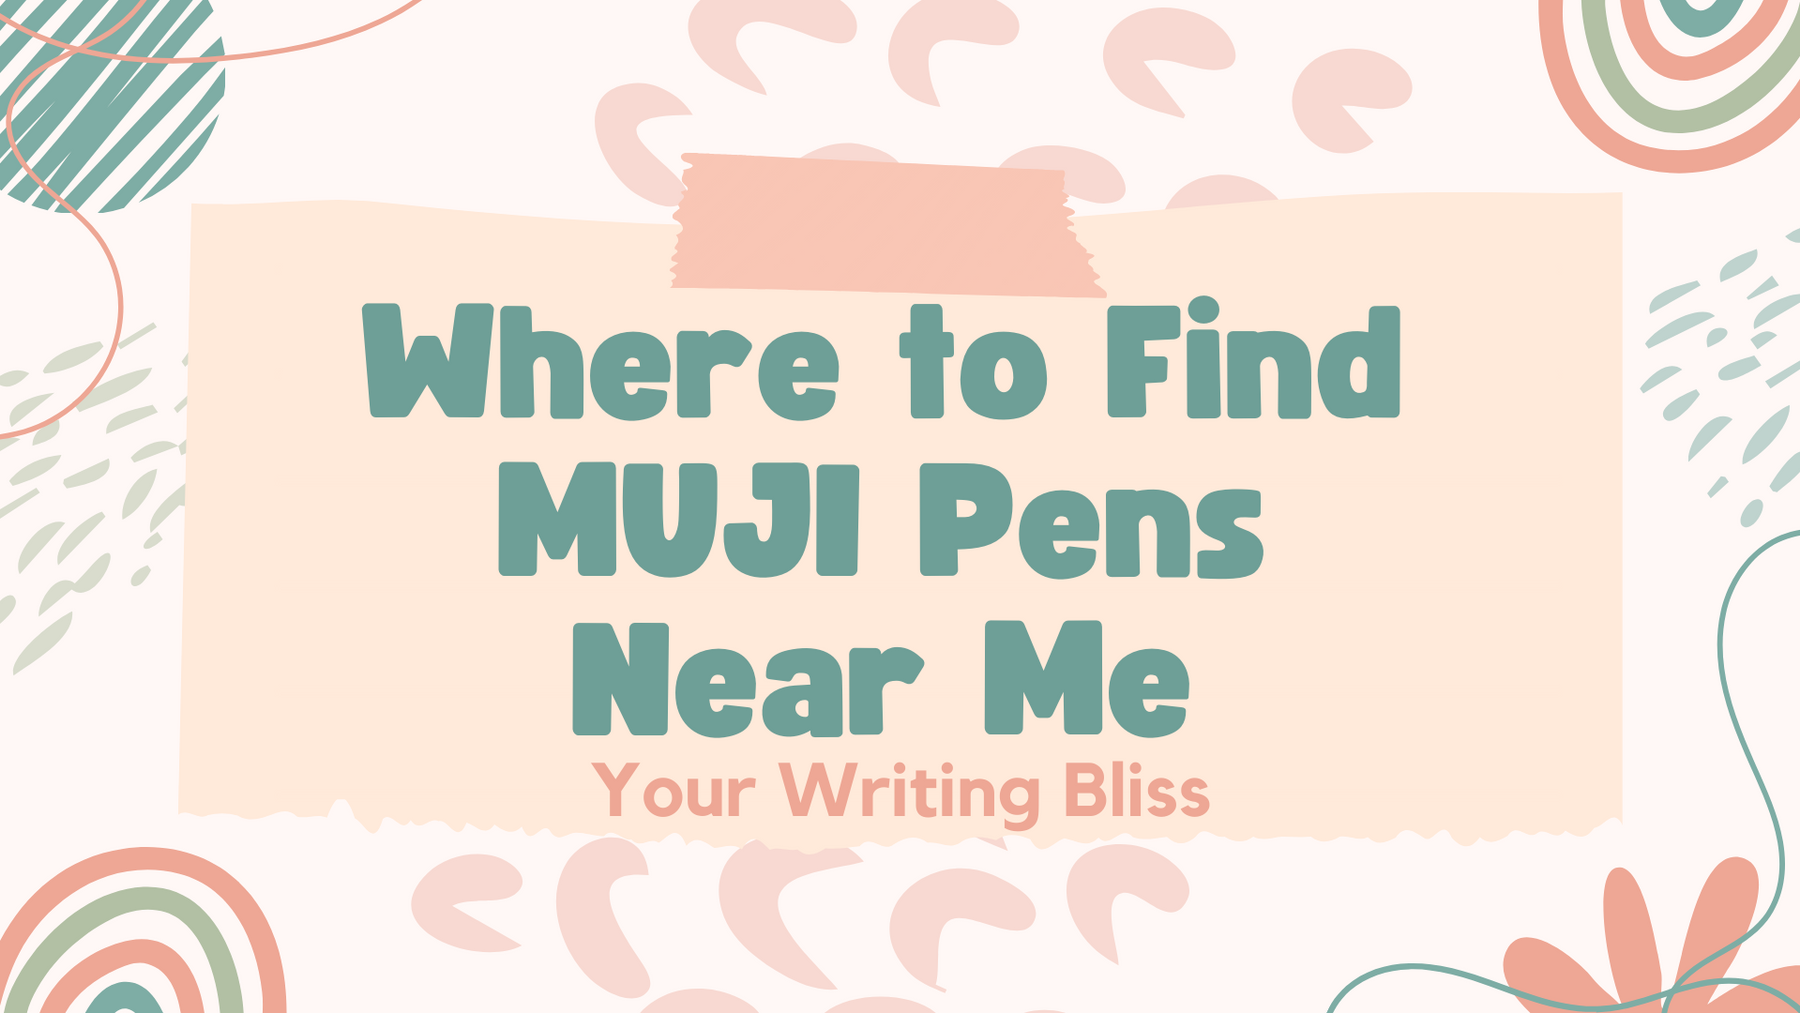 Where to Find Muji Pens Near Me